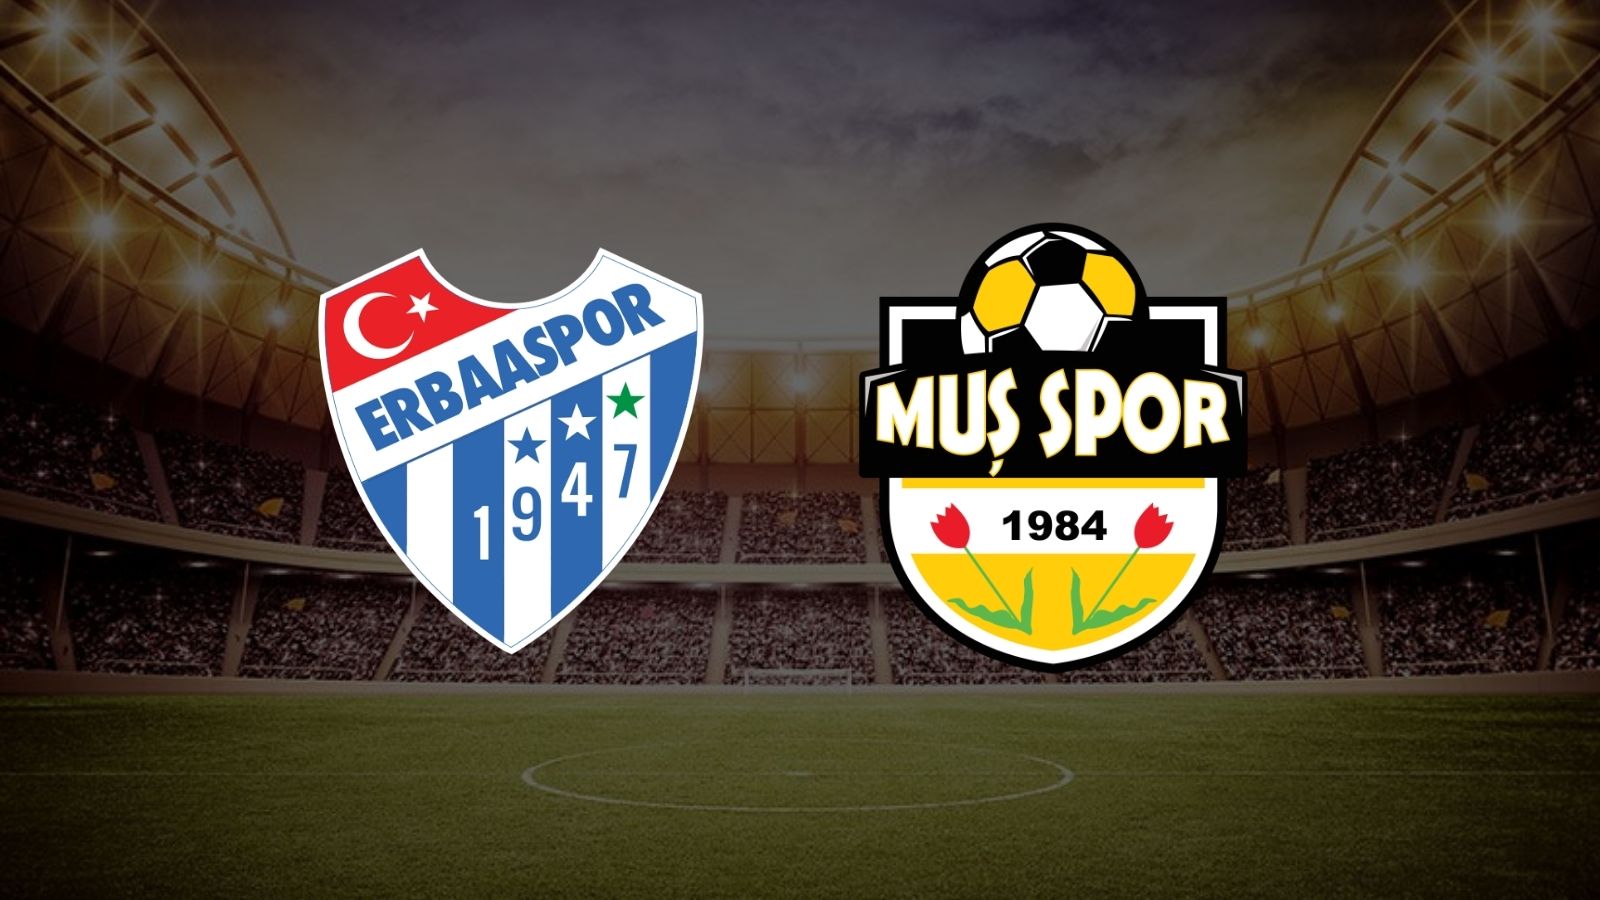  CANLI | Erbaaspor - Muş 1984 maçını canlı izle (Şifresiz Maç linki)